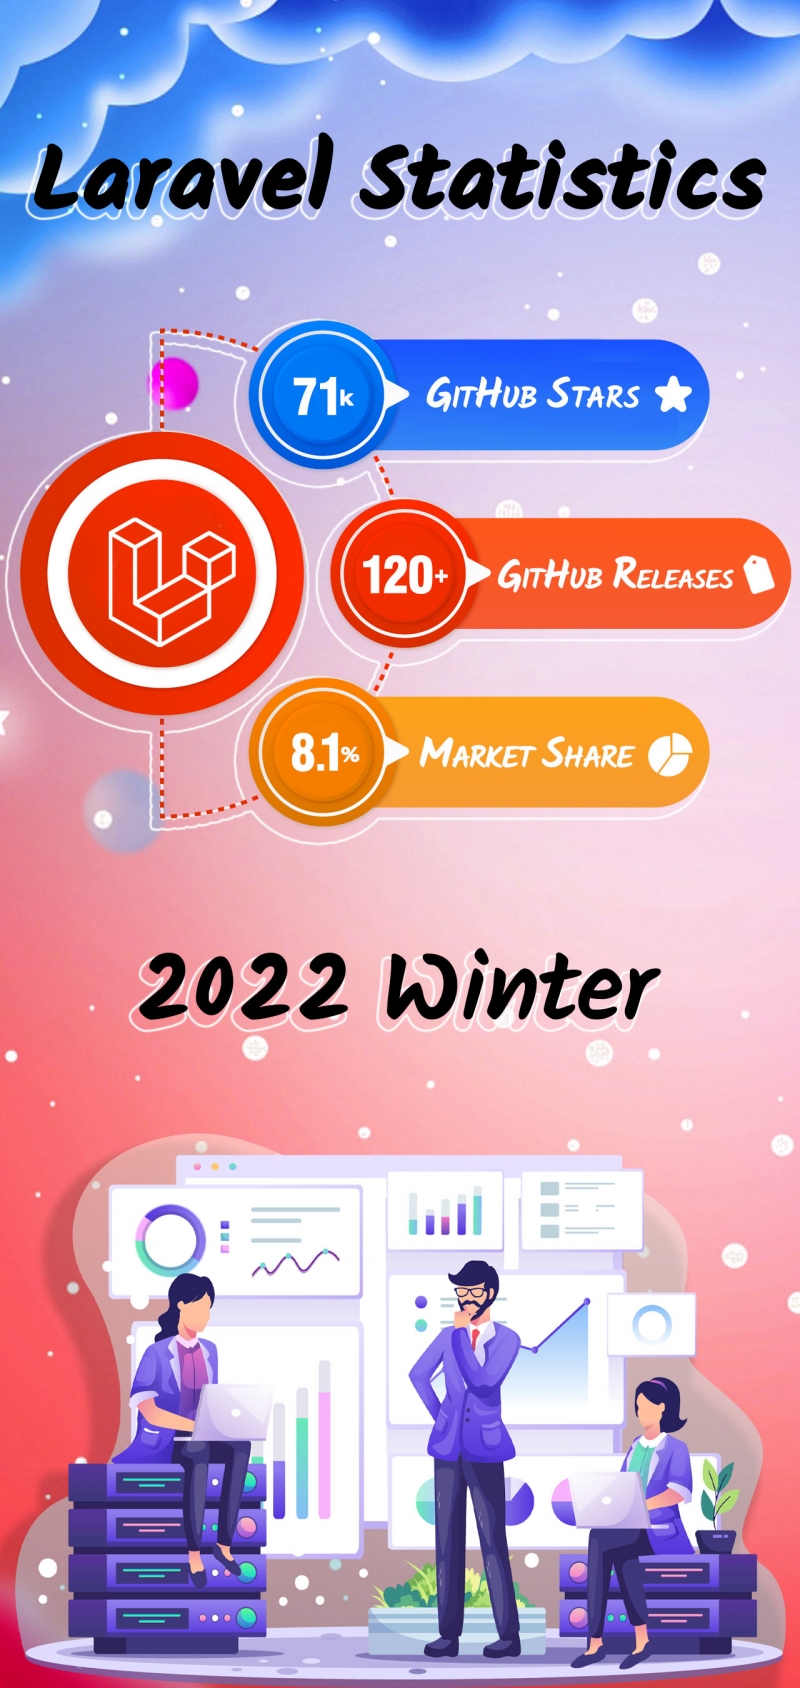 Laravel Statistics in Winter 2022 Infographic